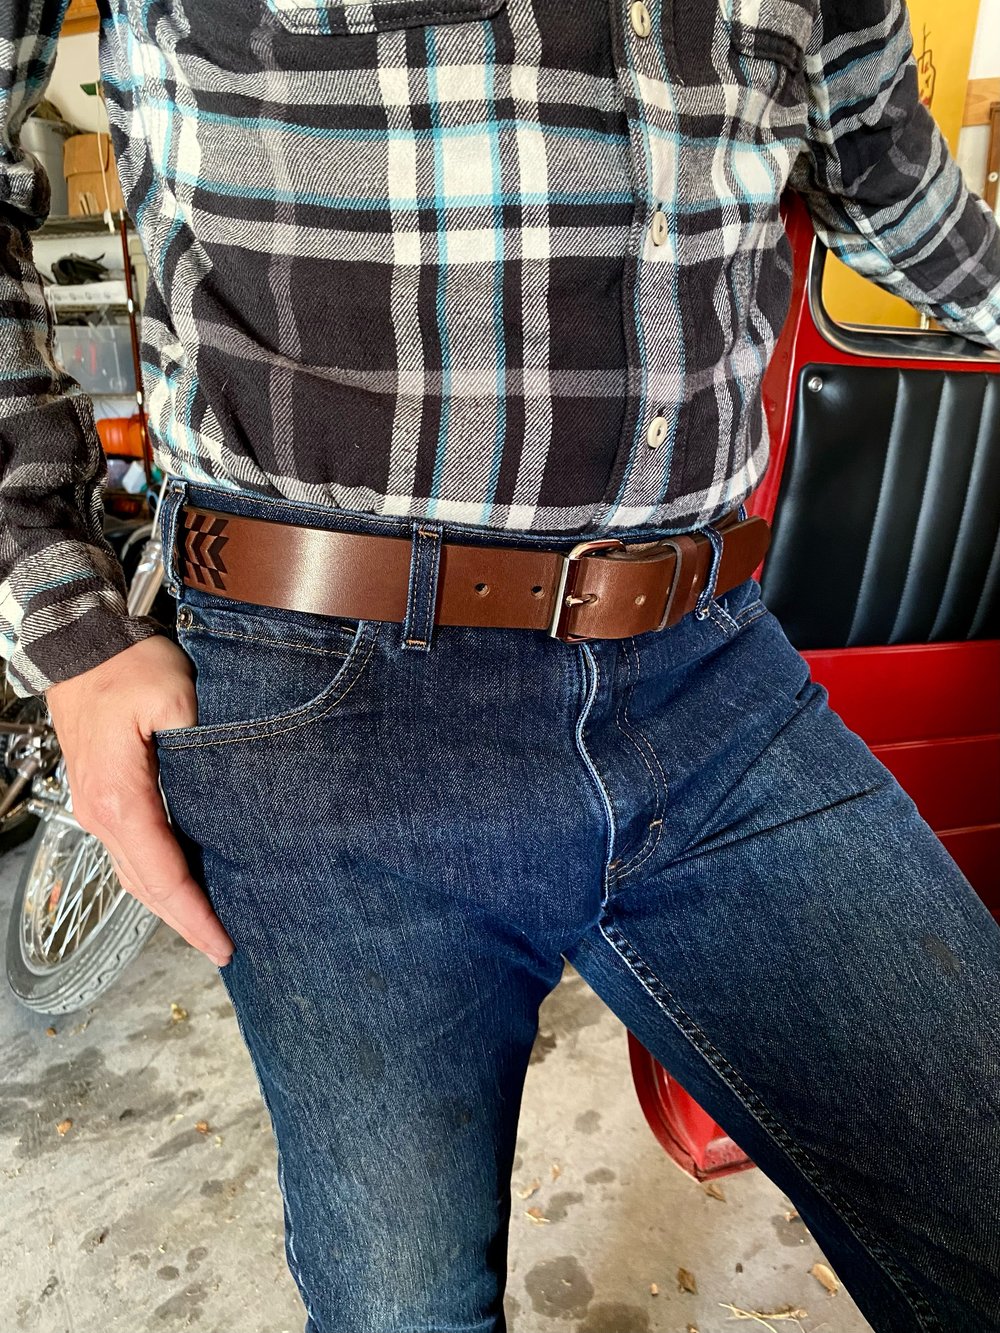 RB Sellars Leather Belts